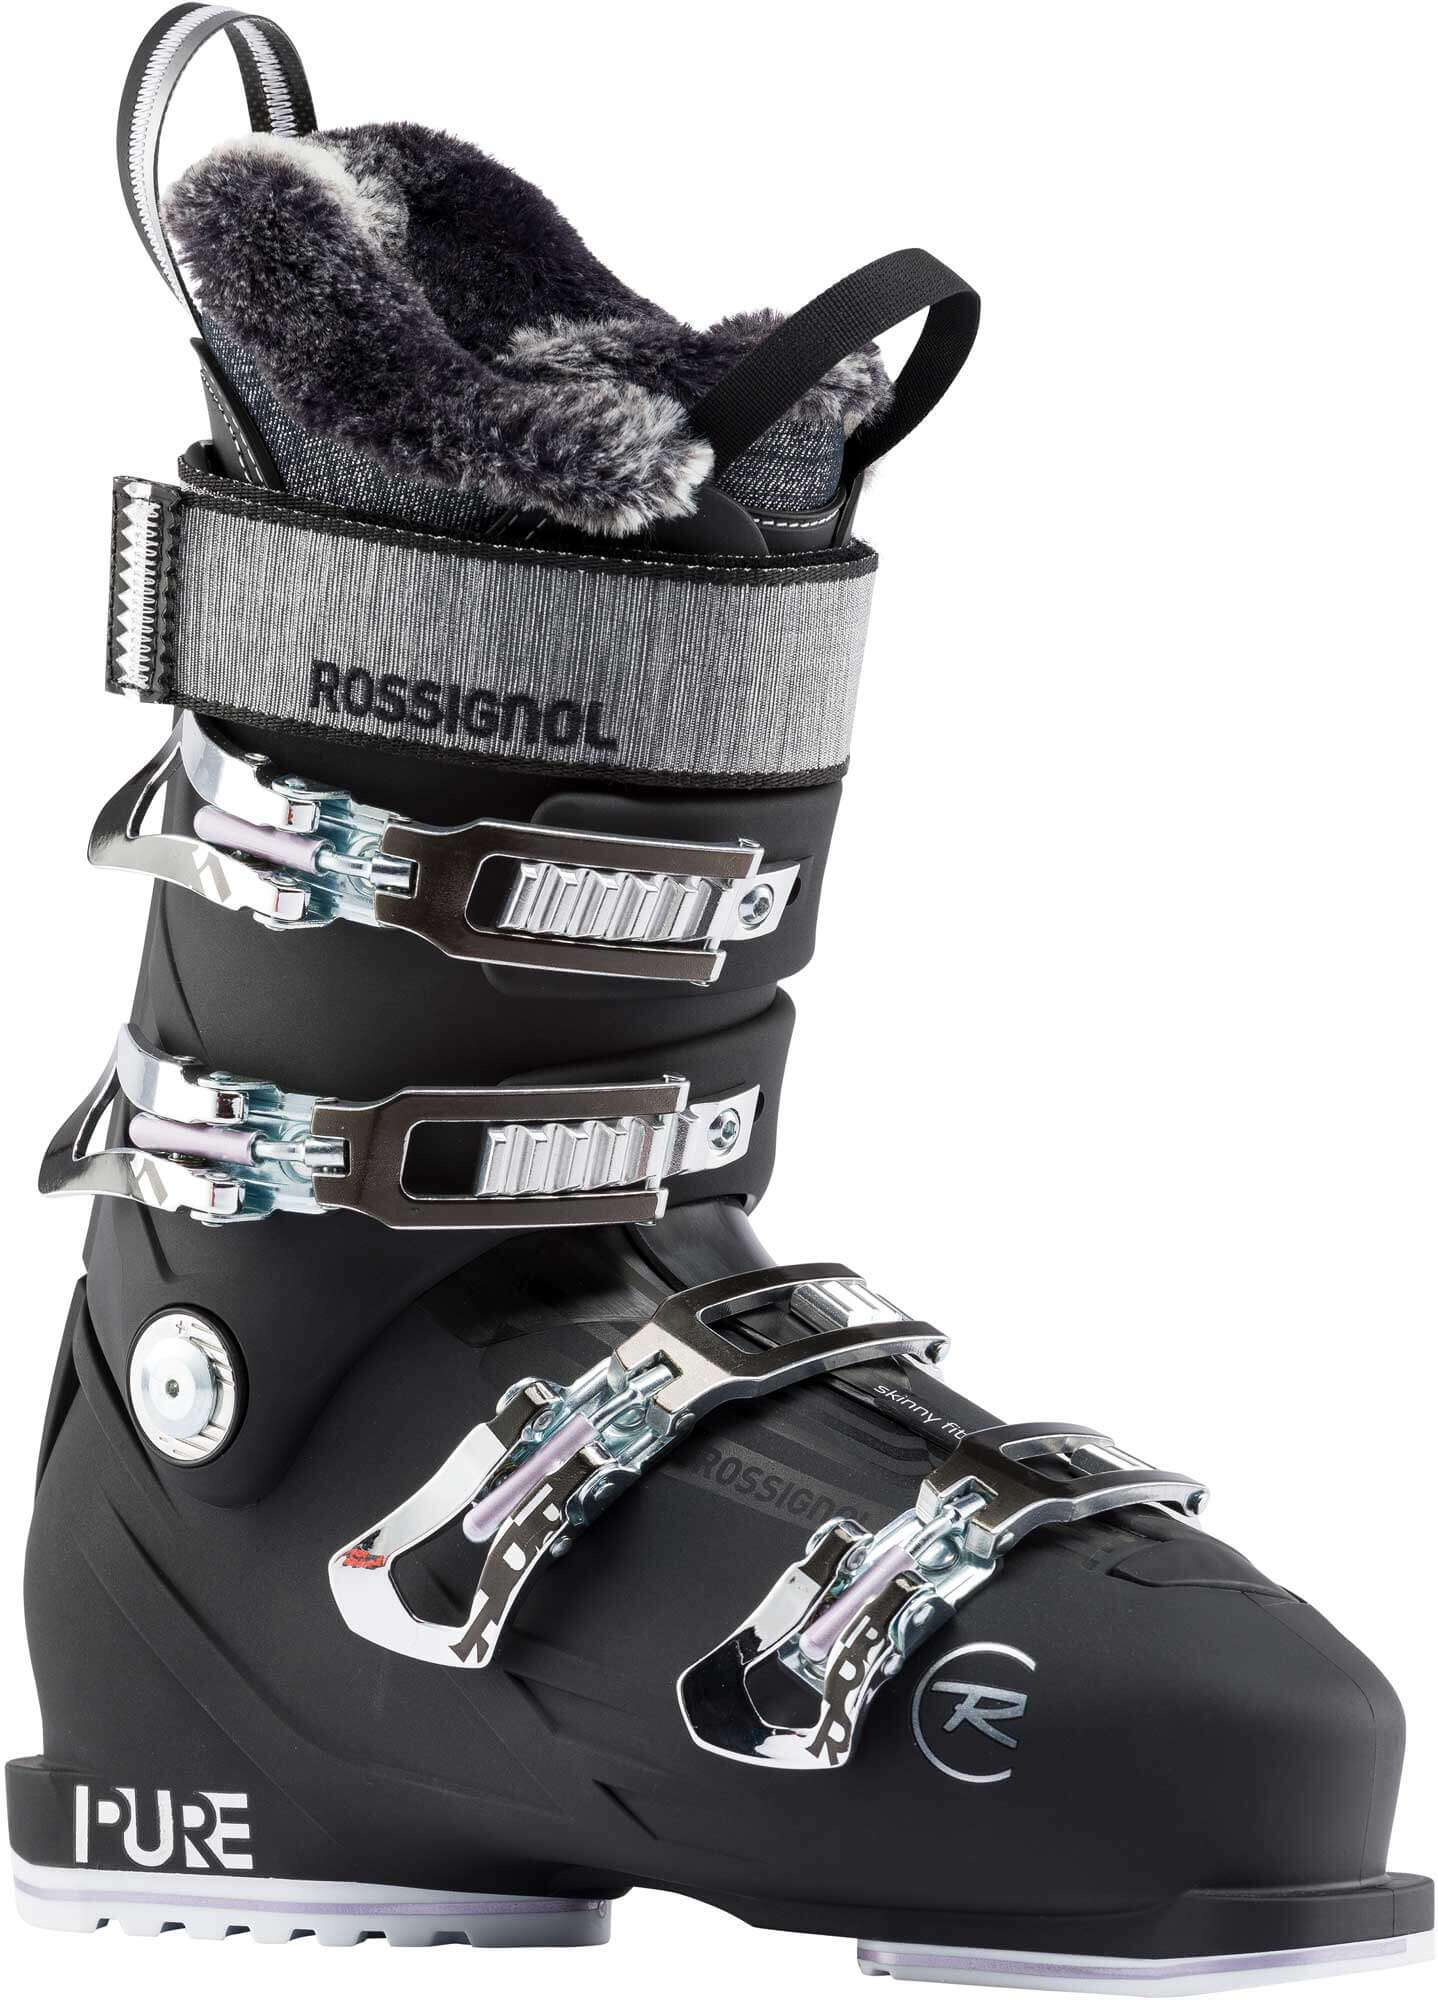 narrow ski boots